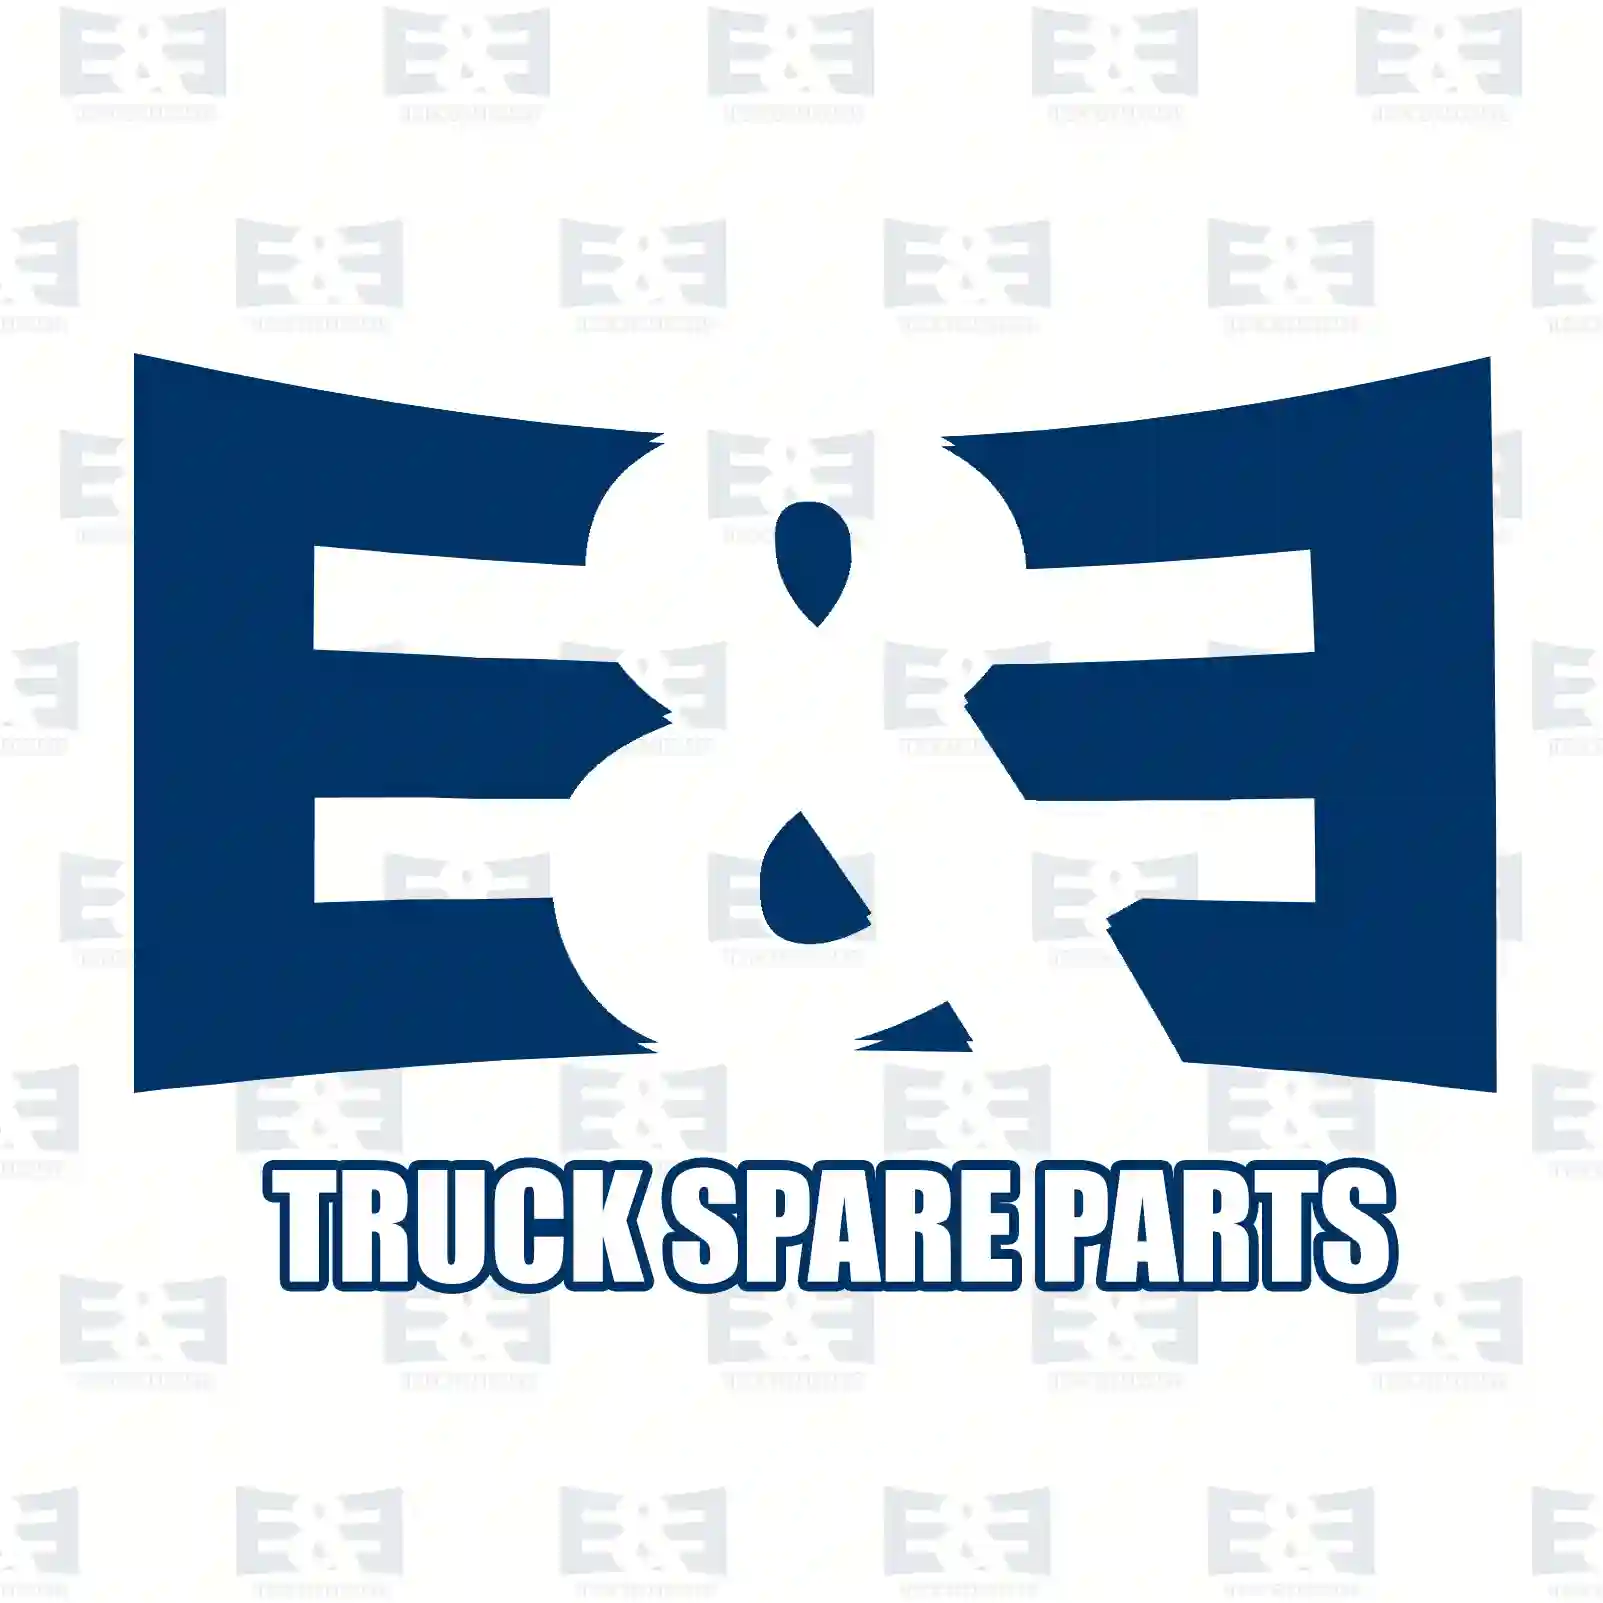 Drum brake lining kit, axle kit - oversize, 2E2294465, 0683038, 0683279, 0683279S, 1808128, 682429, 682862, 683038, 683279, 683279S ||  2E2294465 E&E Truck Spare Parts | Truck Spare Parts, Auotomotive Spare Parts Drum brake lining kit, axle kit - oversize, 2E2294465, 0683038, 0683279, 0683279S, 1808128, 682429, 682862, 683038, 683279, 683279S ||  2E2294465 E&E Truck Spare Parts | Truck Spare Parts, Auotomotive Spare Parts